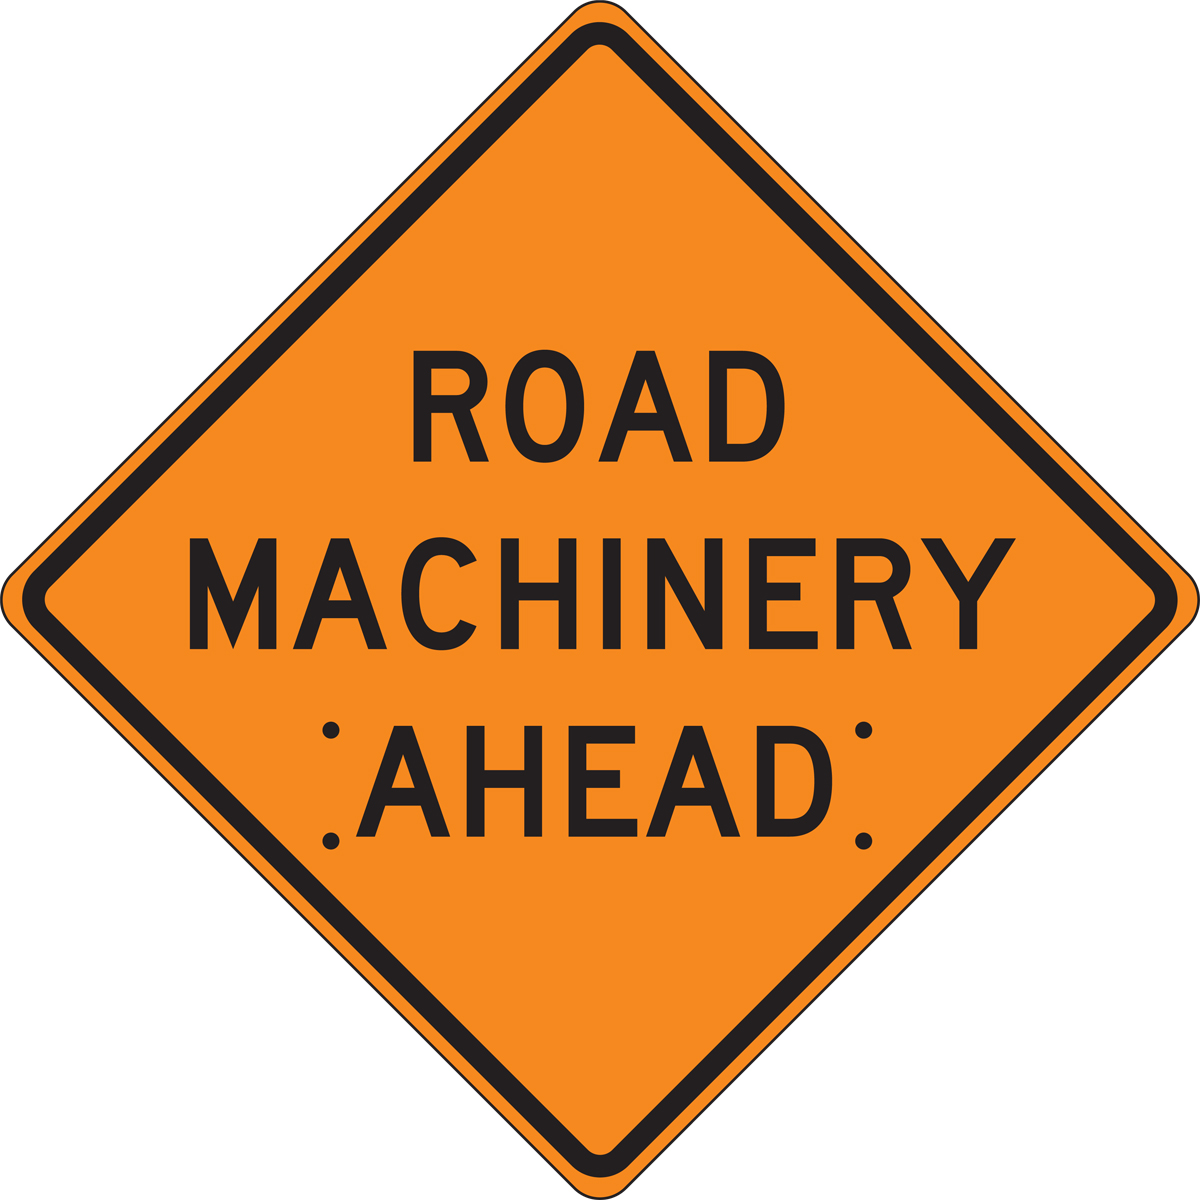 ROAD MACHINERY AHEAD